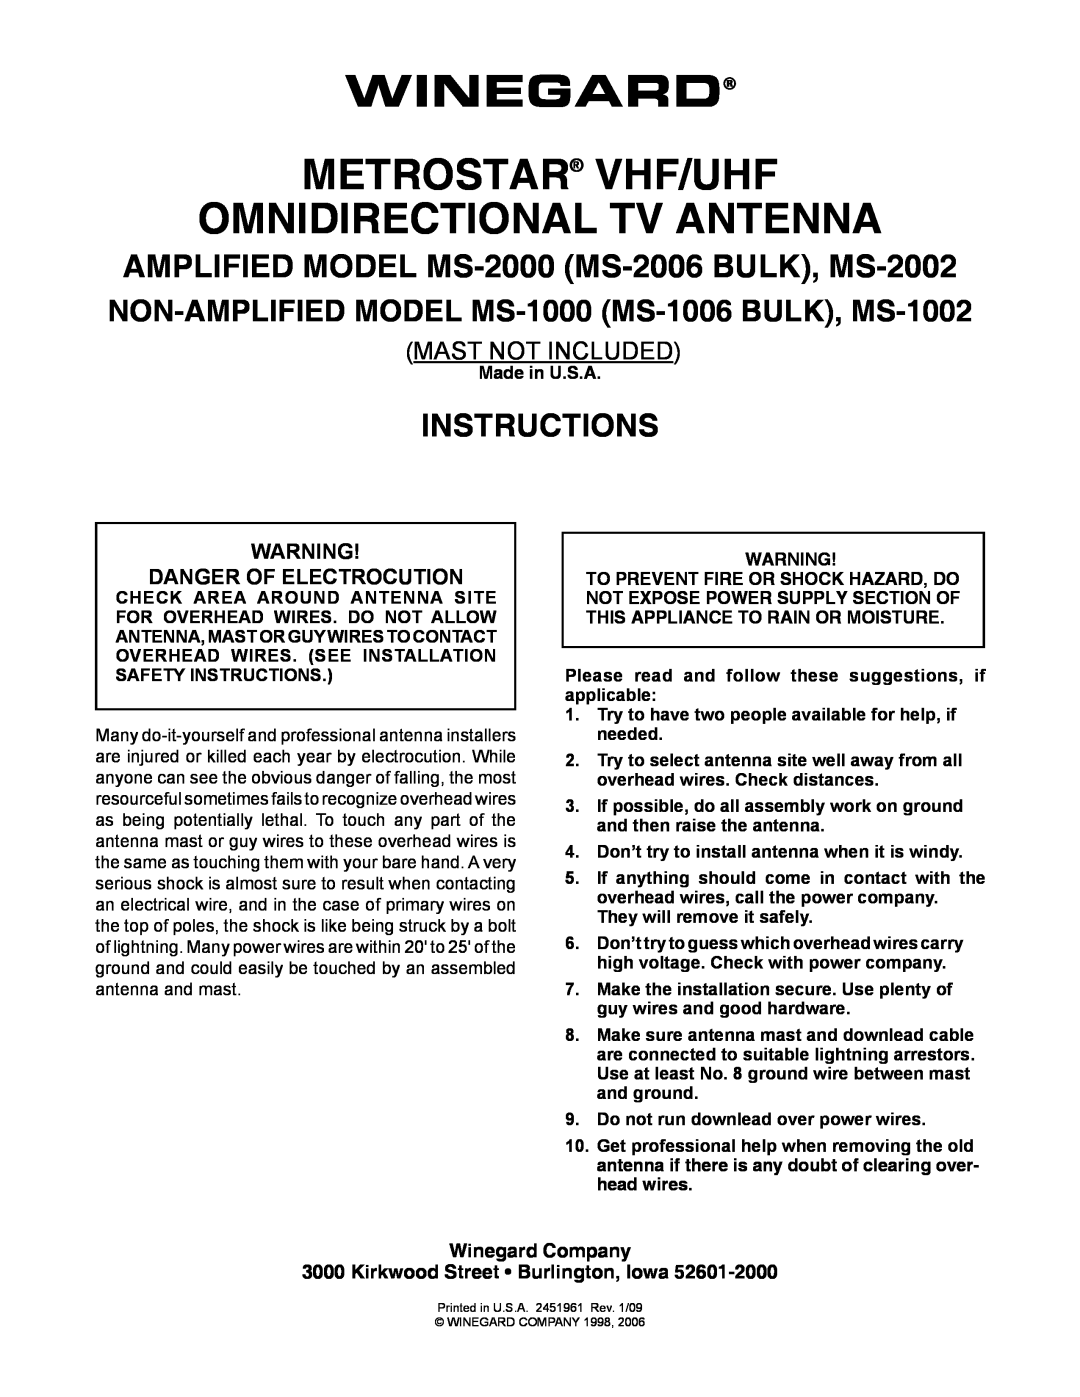 Winegard MS-2002 manual Danger Of Electrocution, Made in U.S.A, Winegard, Metrostar Vhf/Uhf Omnidirectional Tv Antenna 